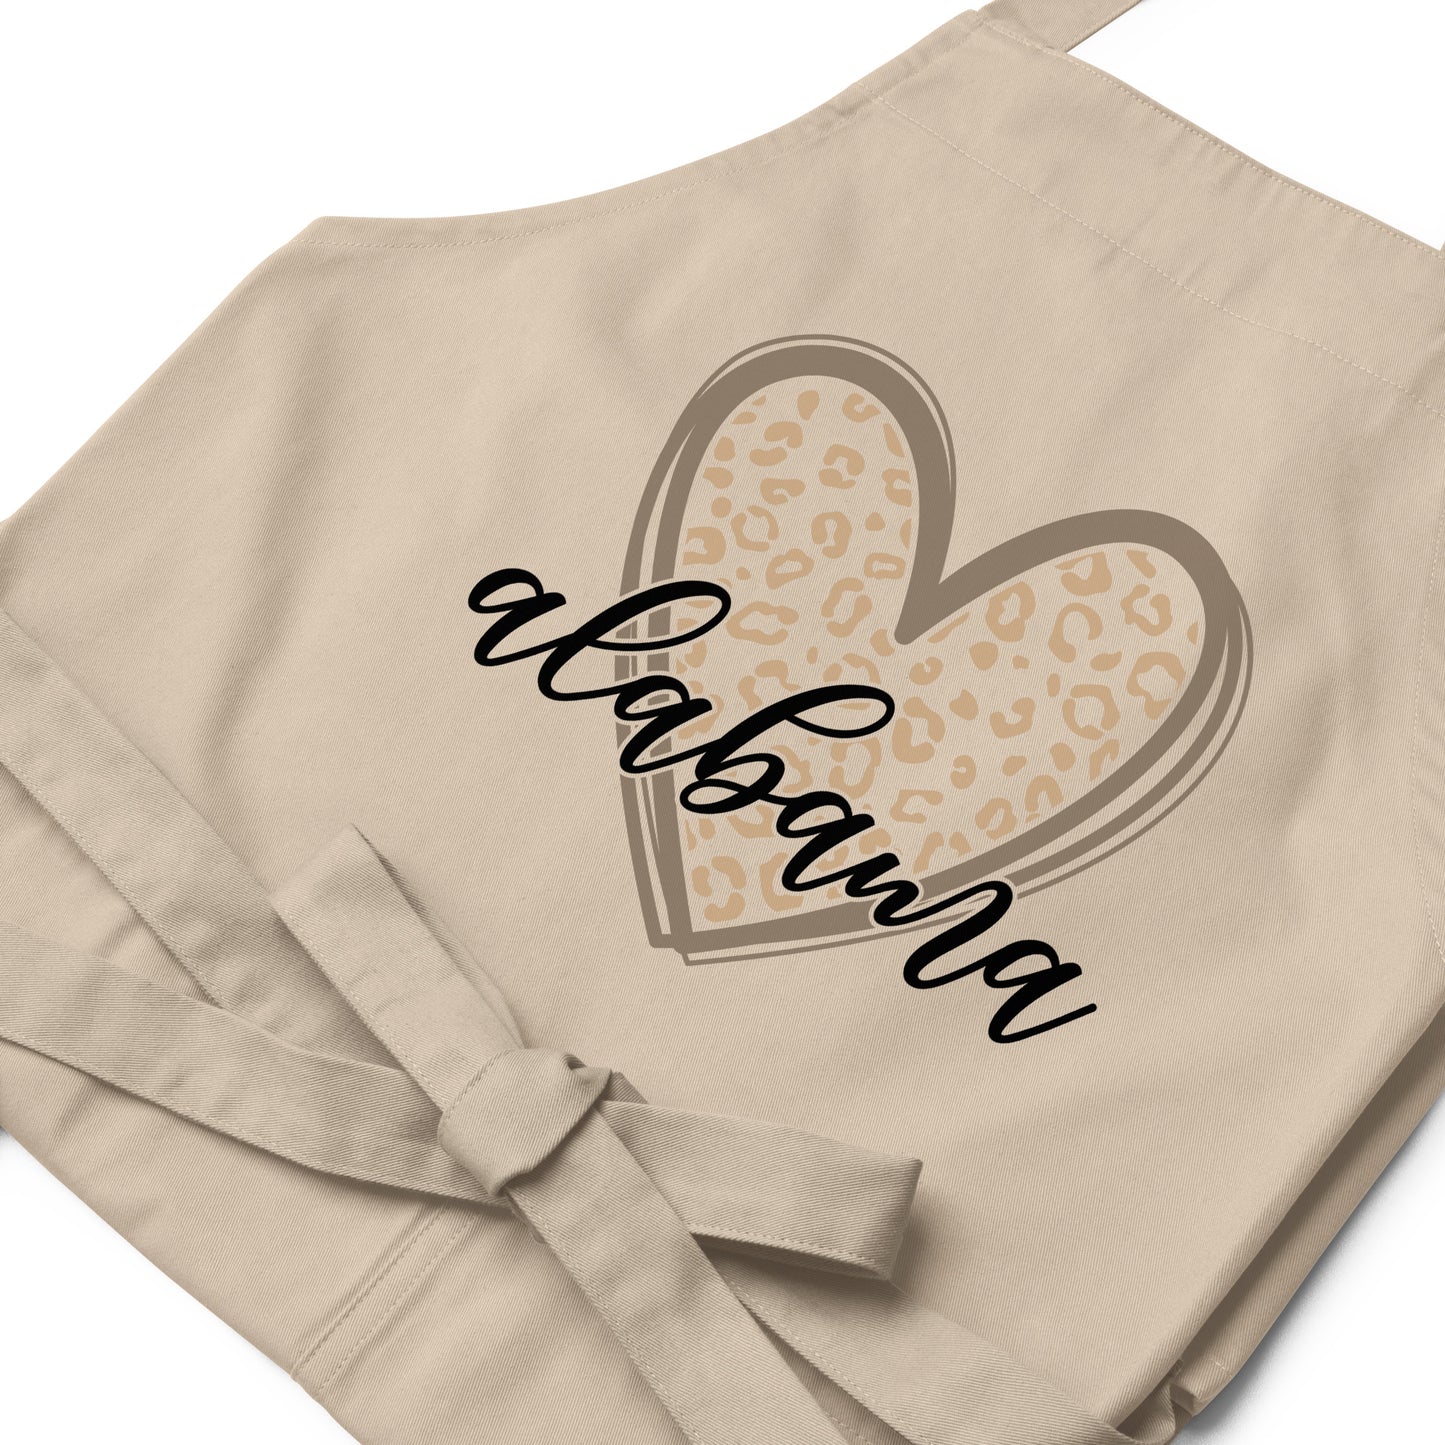 Alabama Leopard Heart Organic cotton apron